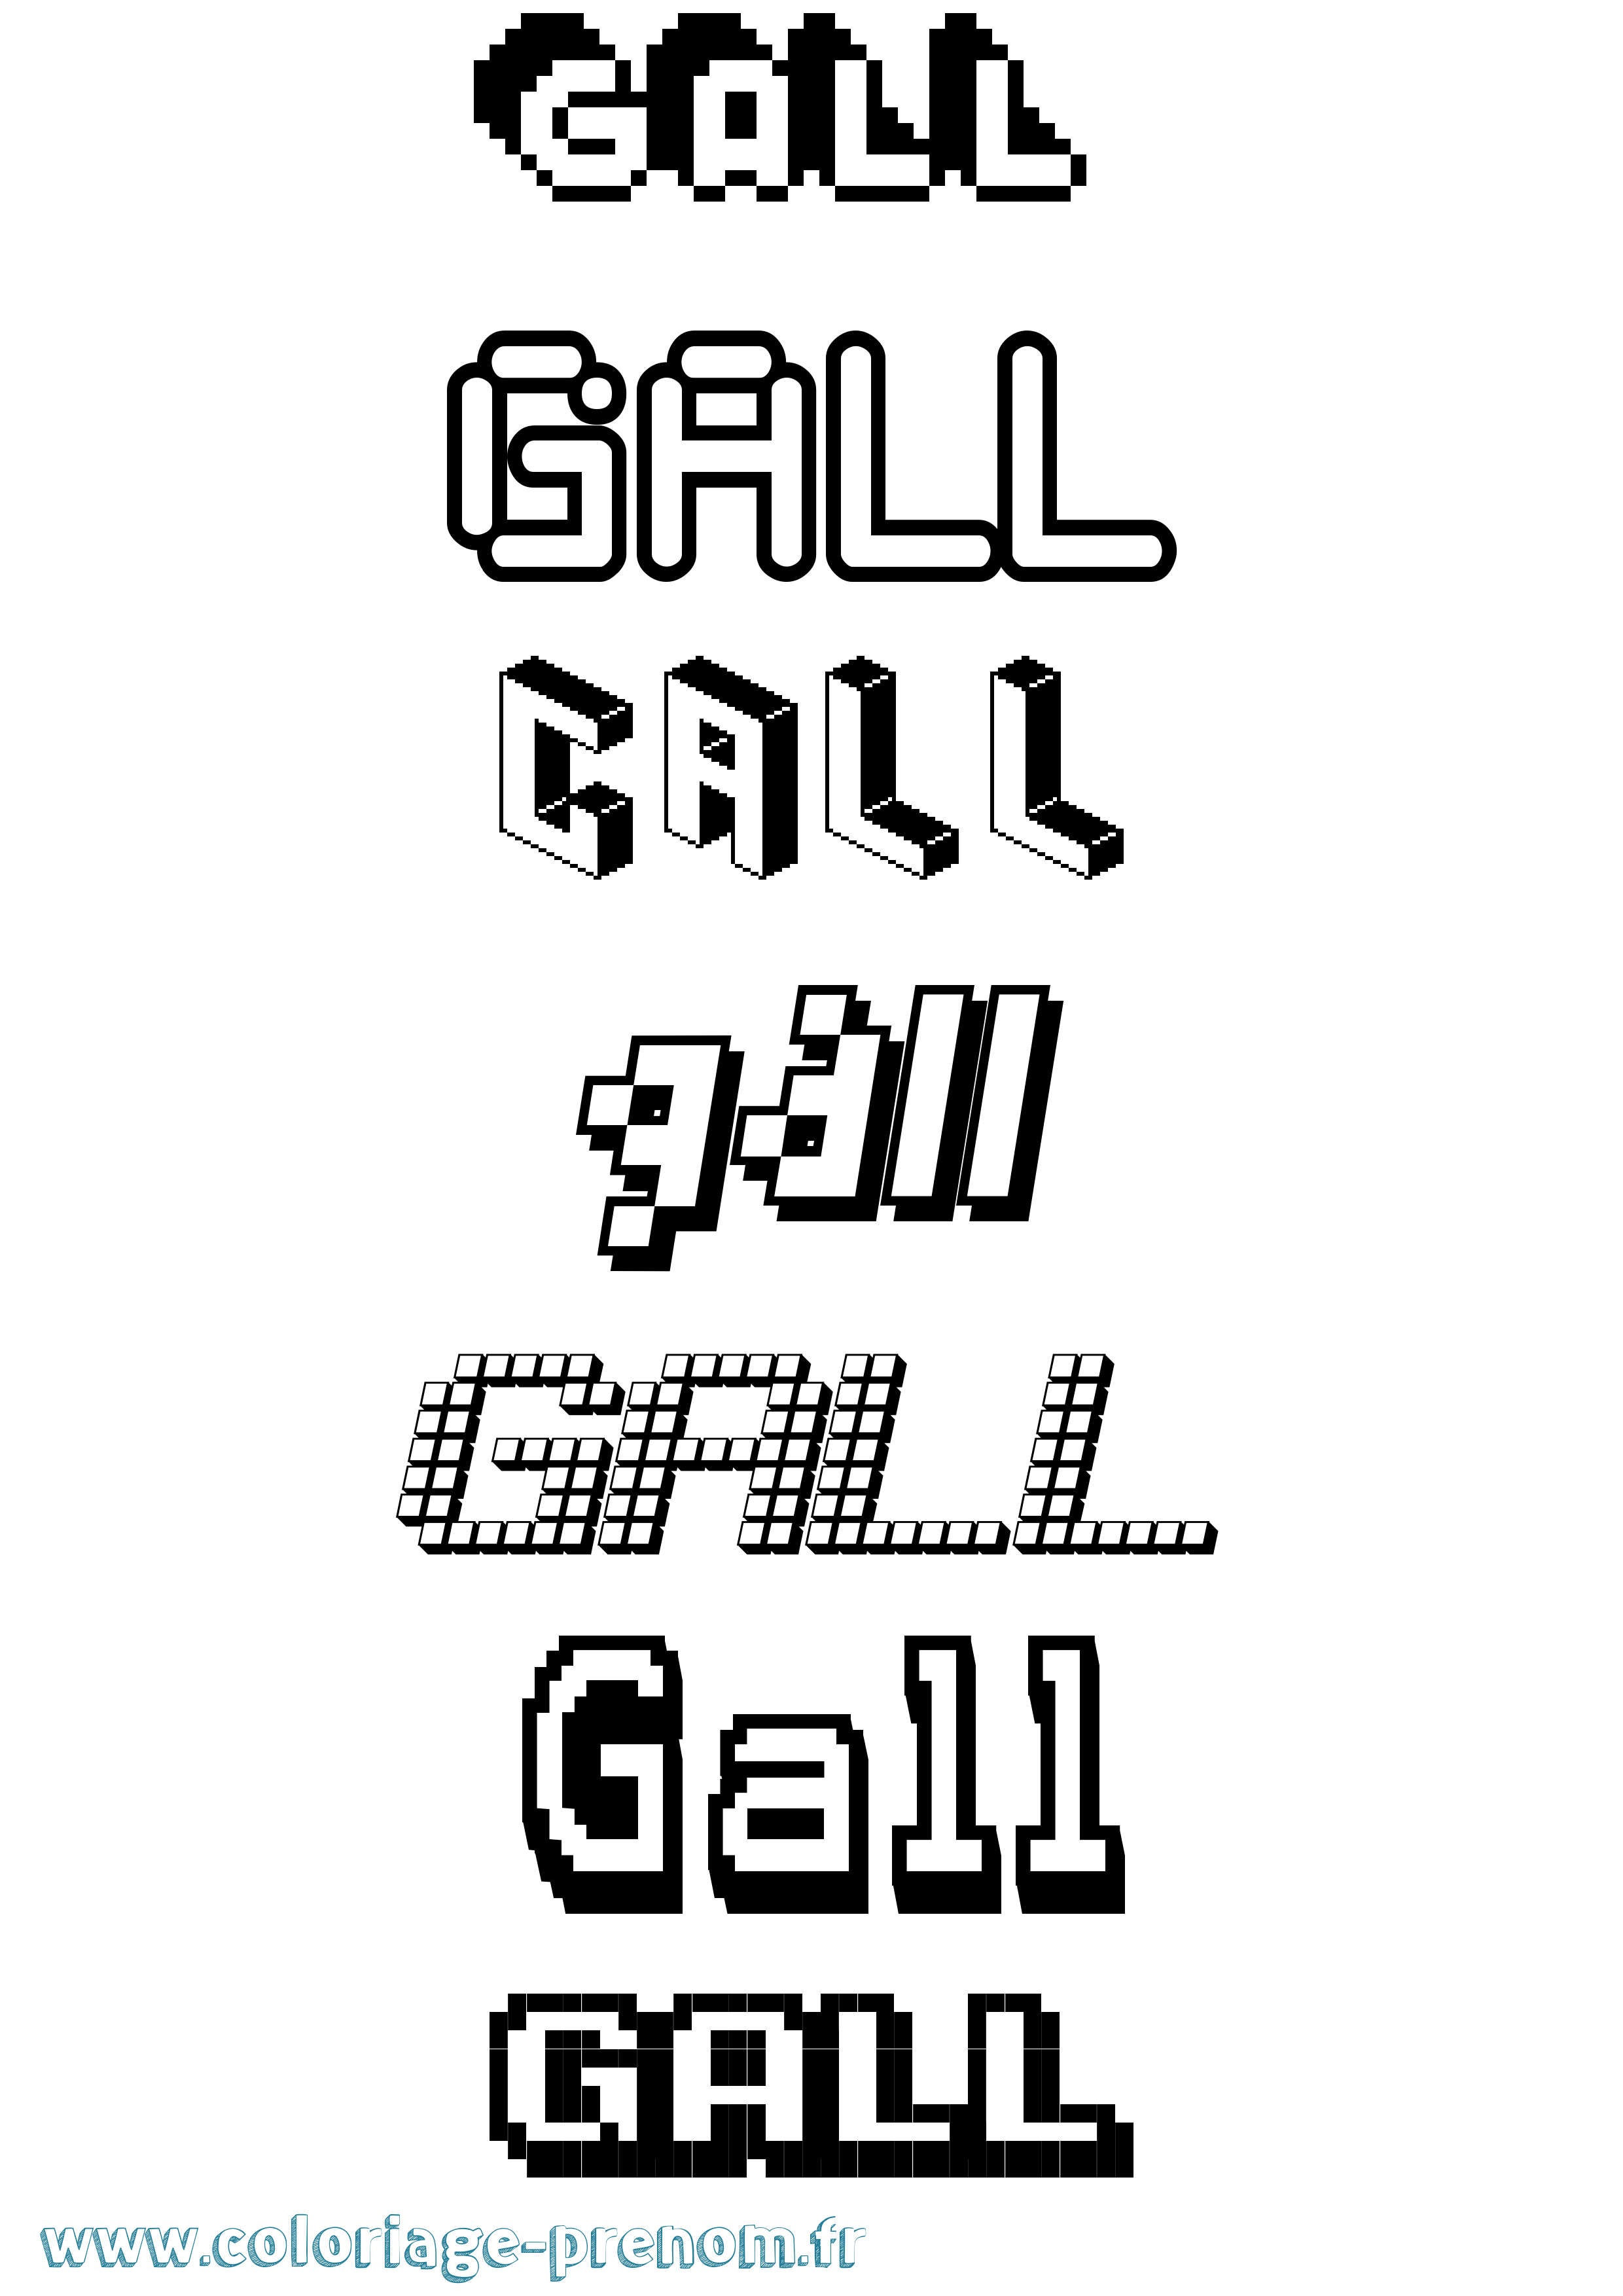 Coloriage prénom Gall Pixel